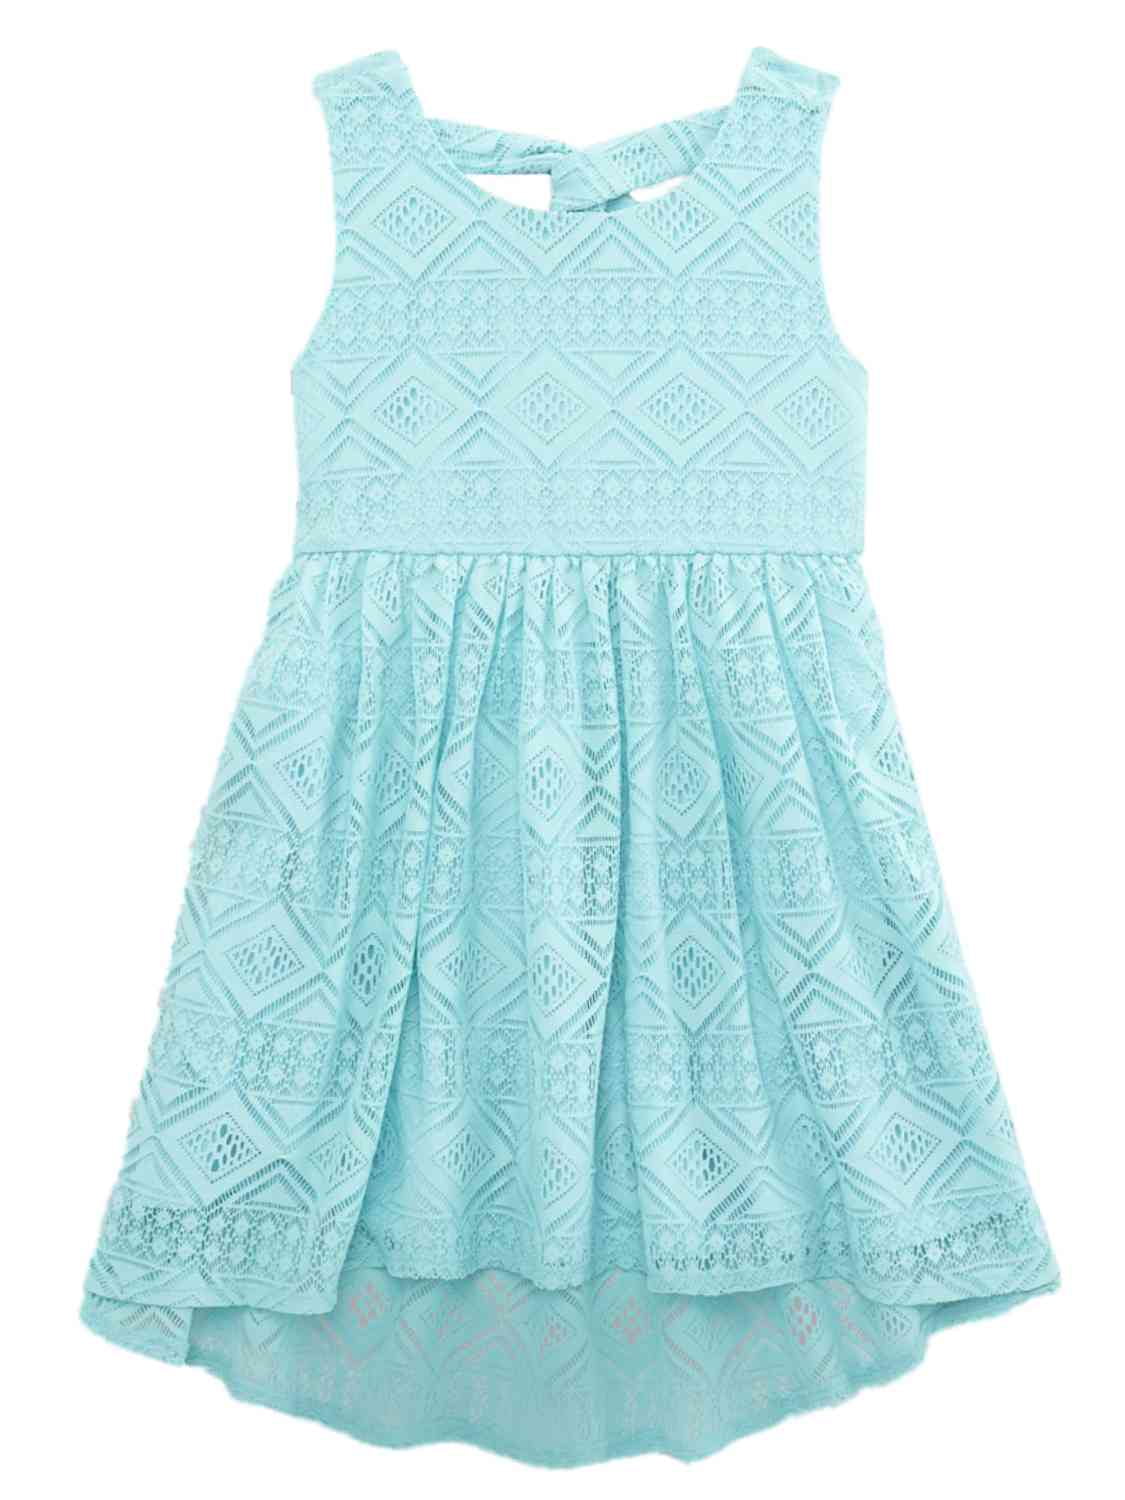 Toddler Girls Blue Lace Sun Dress 